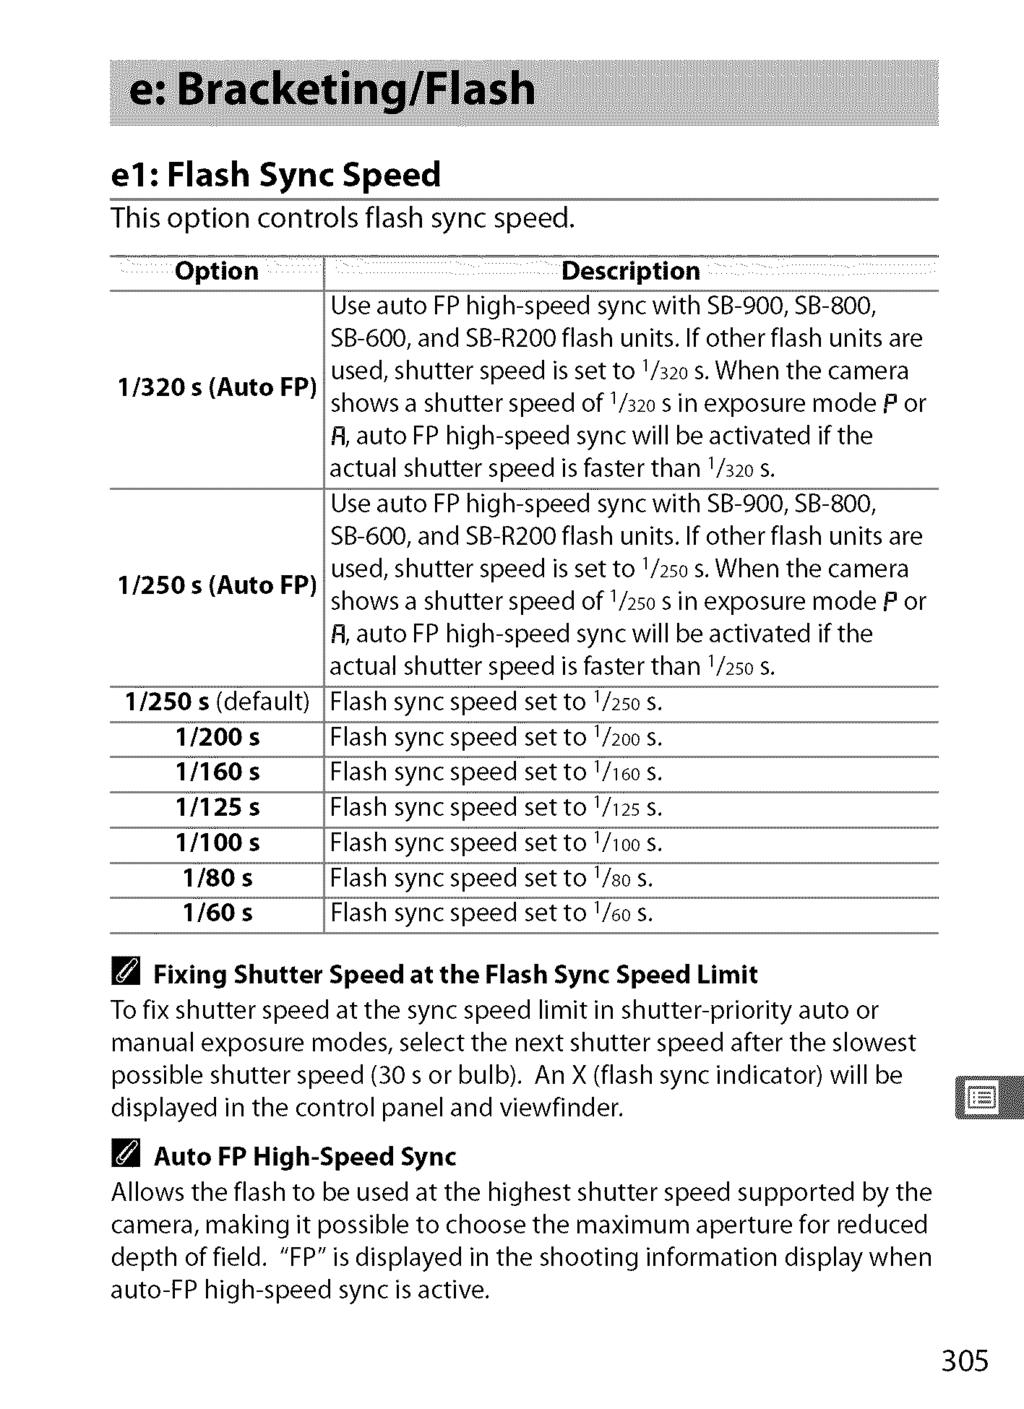 el: Flash Sync Speed This option controls flash sync speed. Description Use auto FP high-speed sync with SB-900, SB-800, SB-600, and SB-R200 flash units.